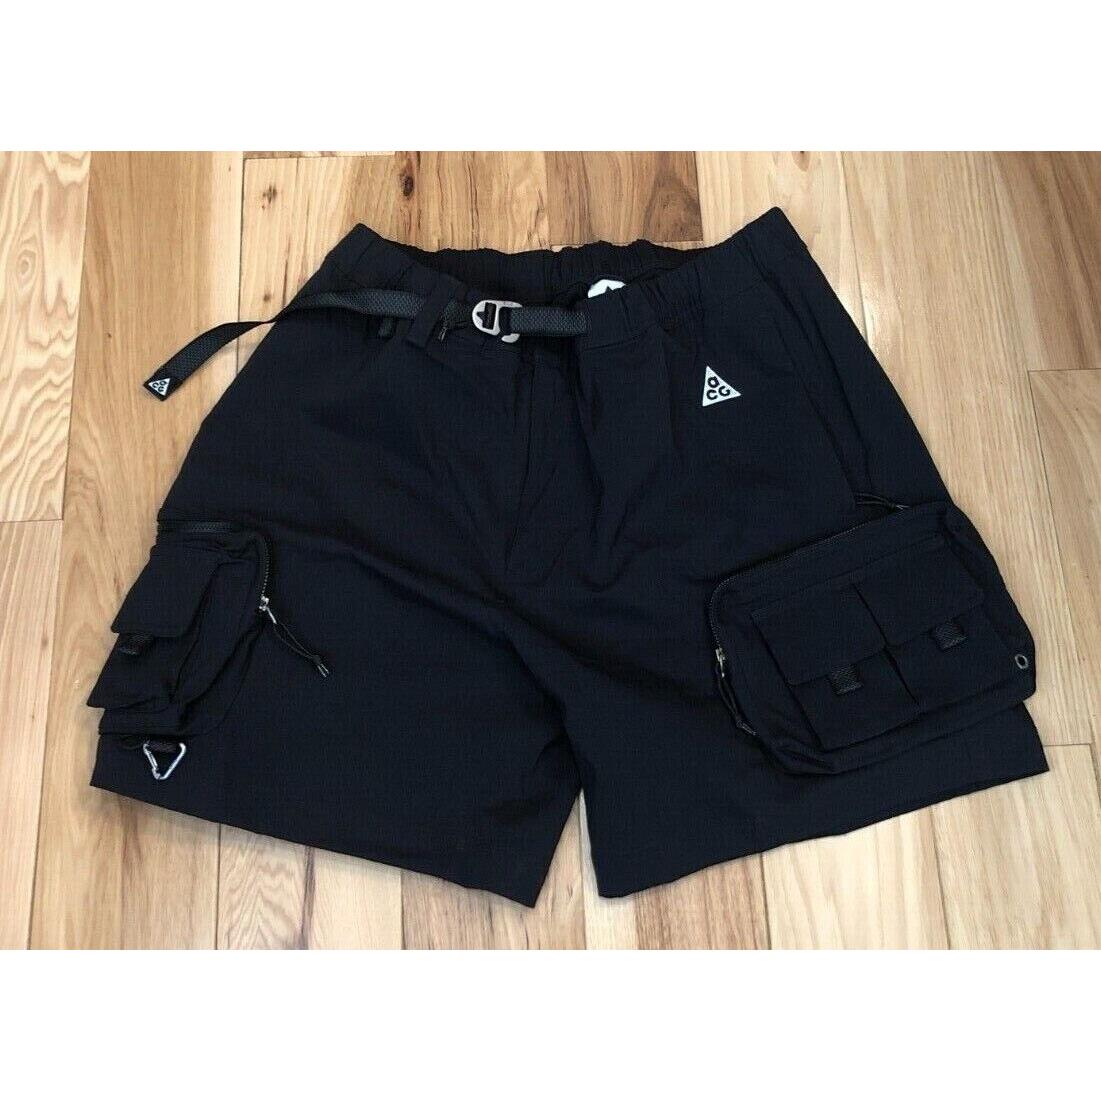 Nike Acg Cargo Shorts Black DH8347 010 Men`s Xxl